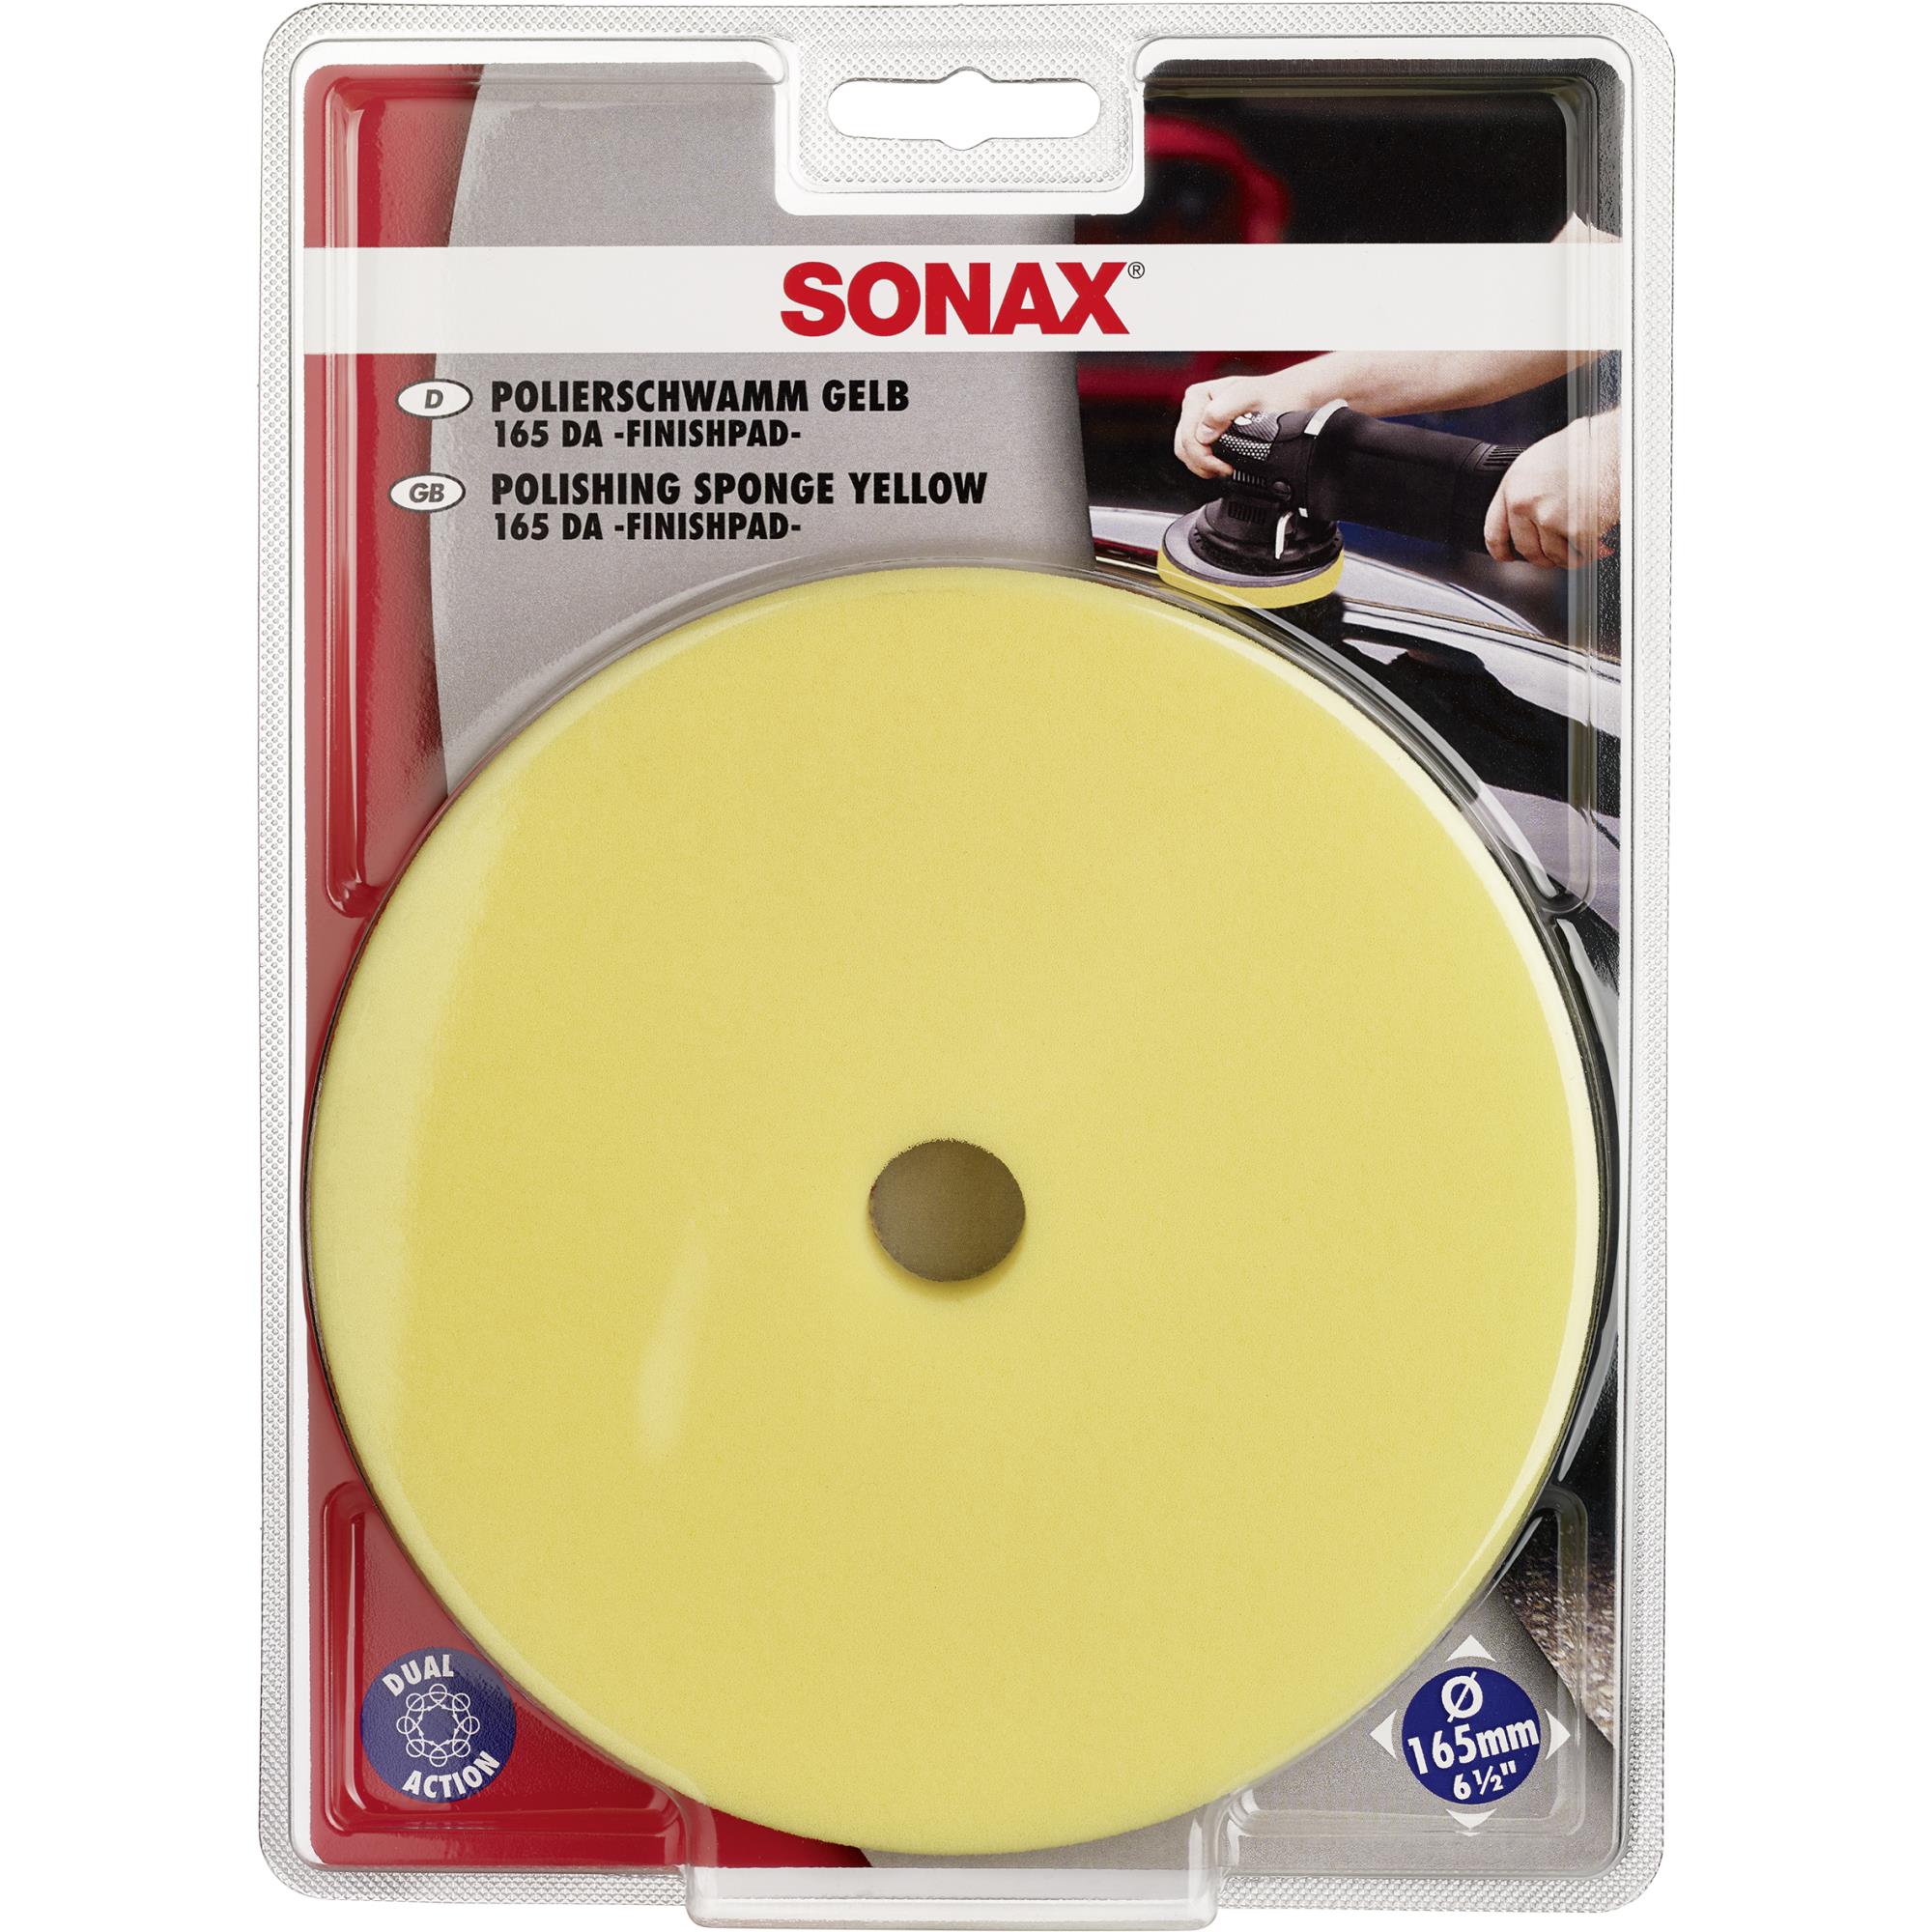 SONAX 04935000  PolierSchwamm gelb 165 DA FinishPad Hochglanzfinish 23 g